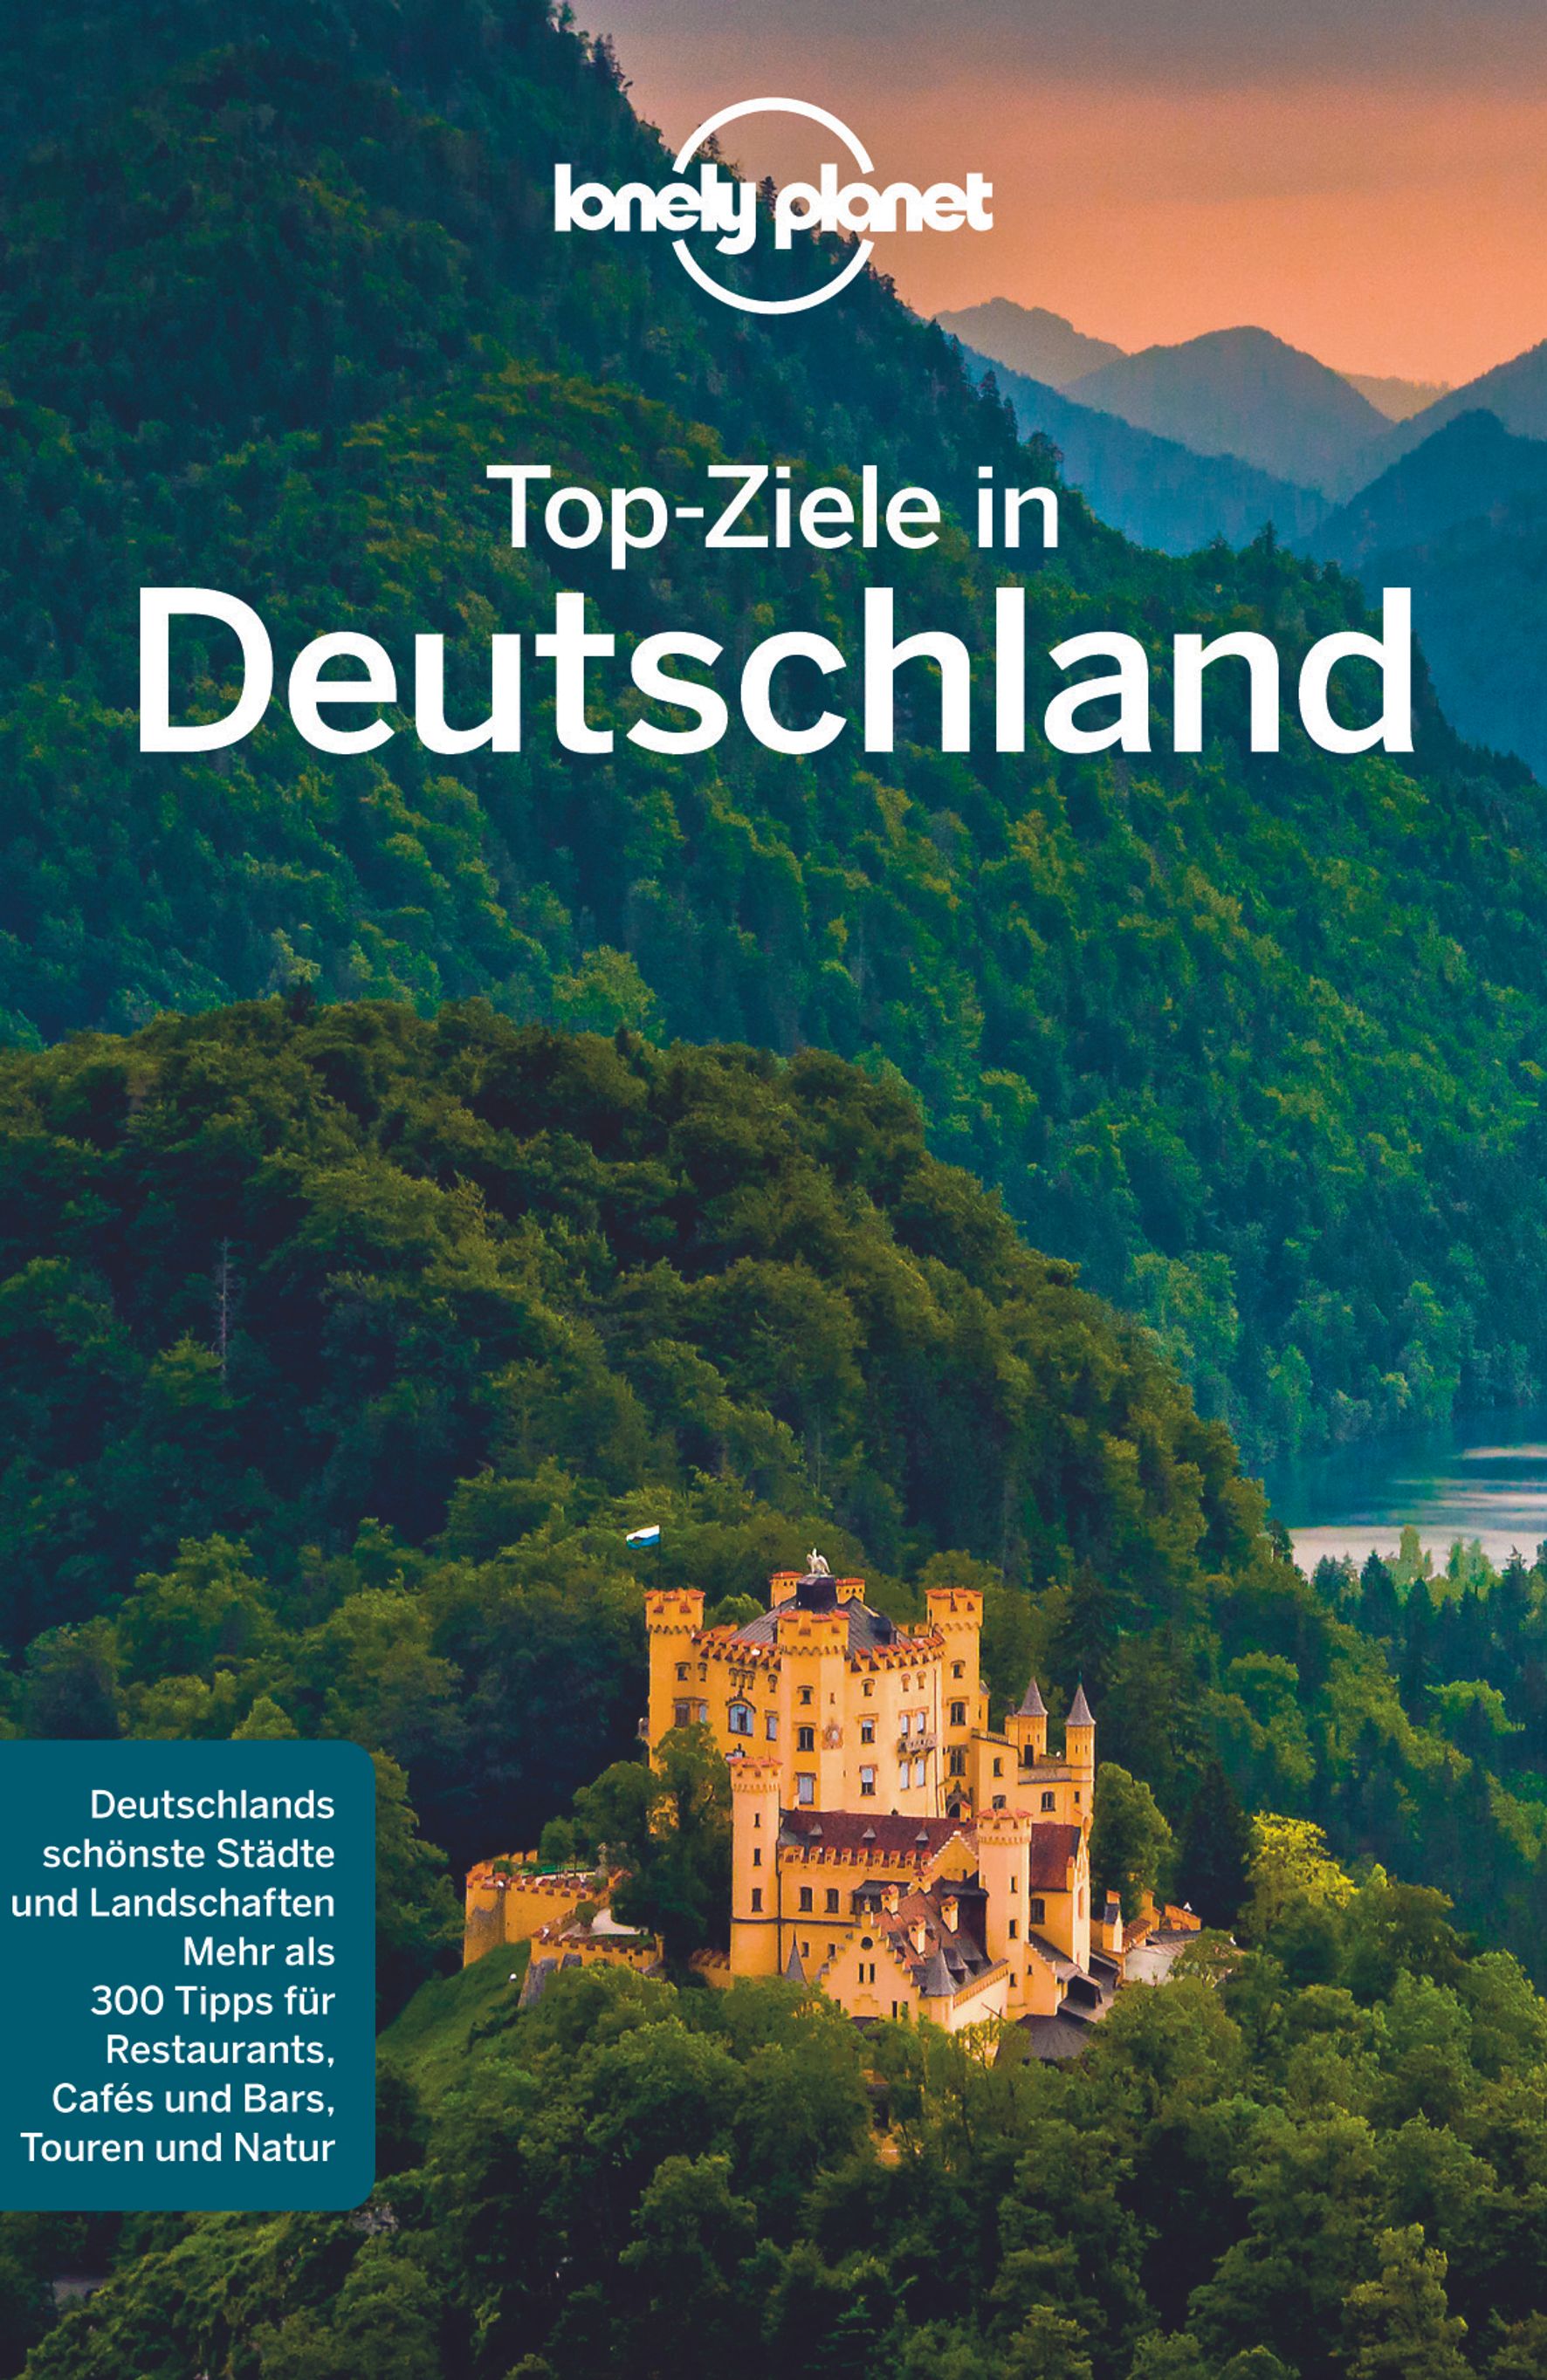 Lonely Planet Lonely Planet Top-Ziele in Deutschland